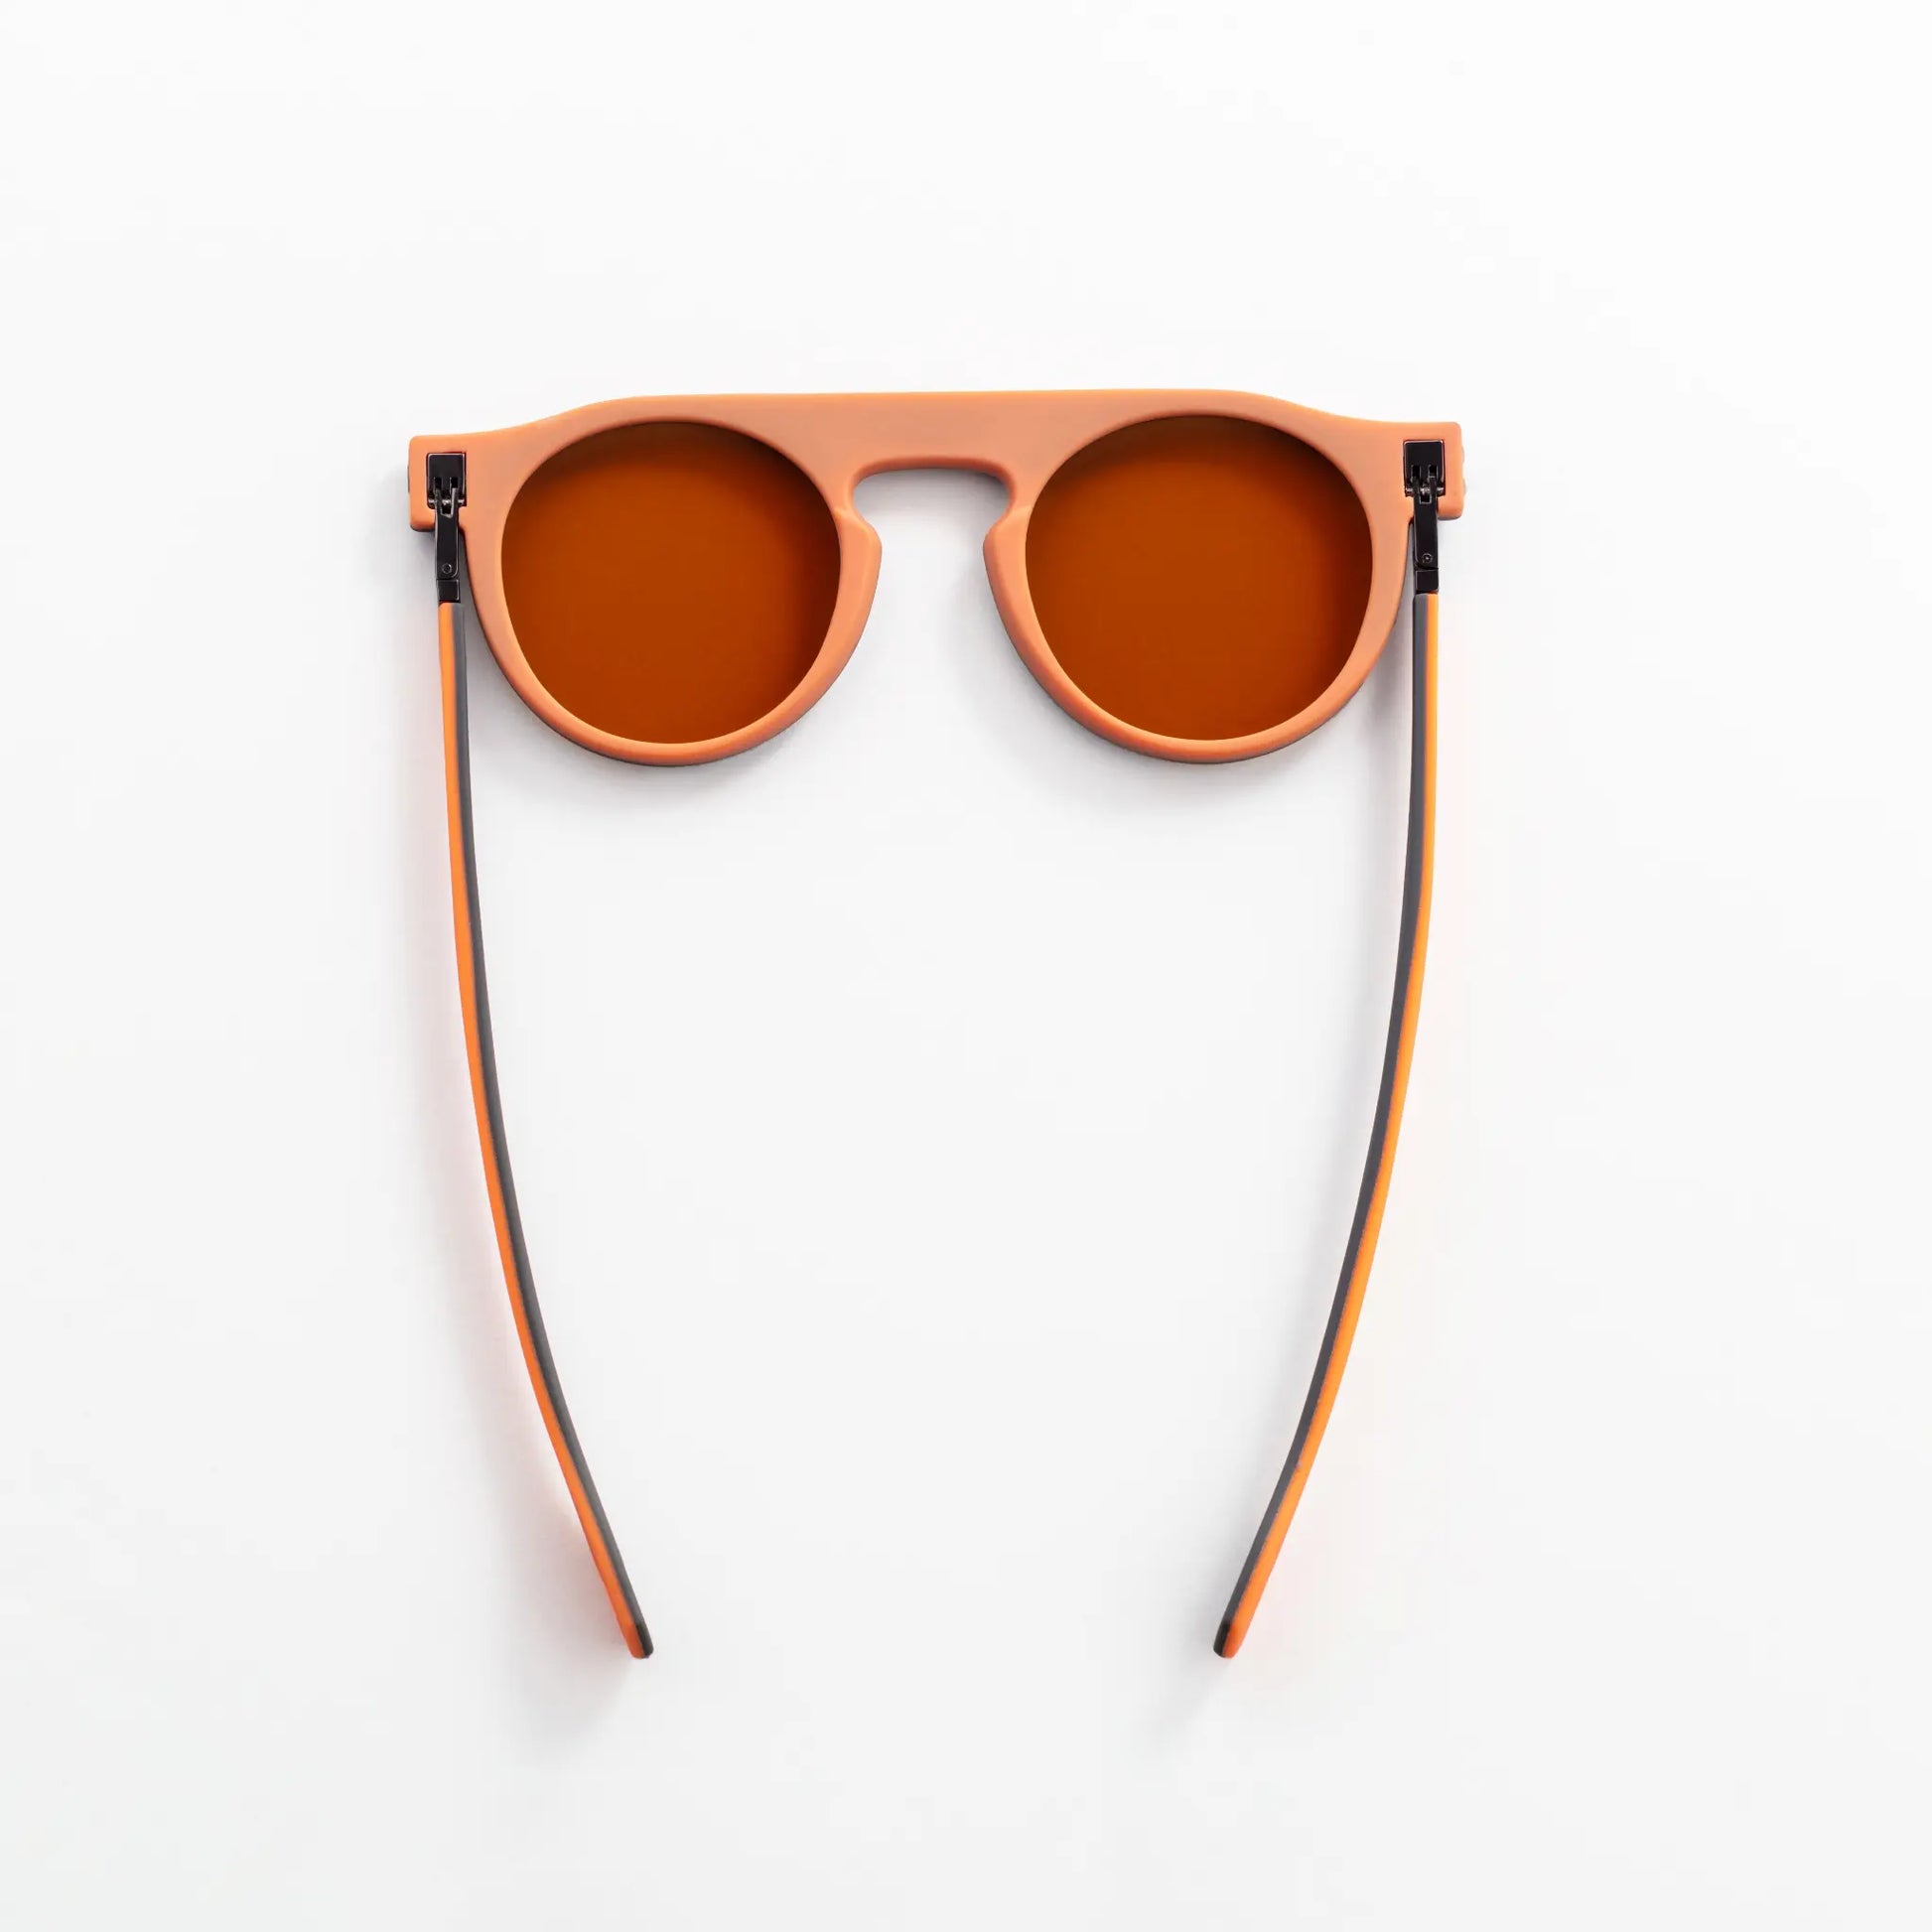 Reverso sunglasses grey & orange reversible & ultra light top view